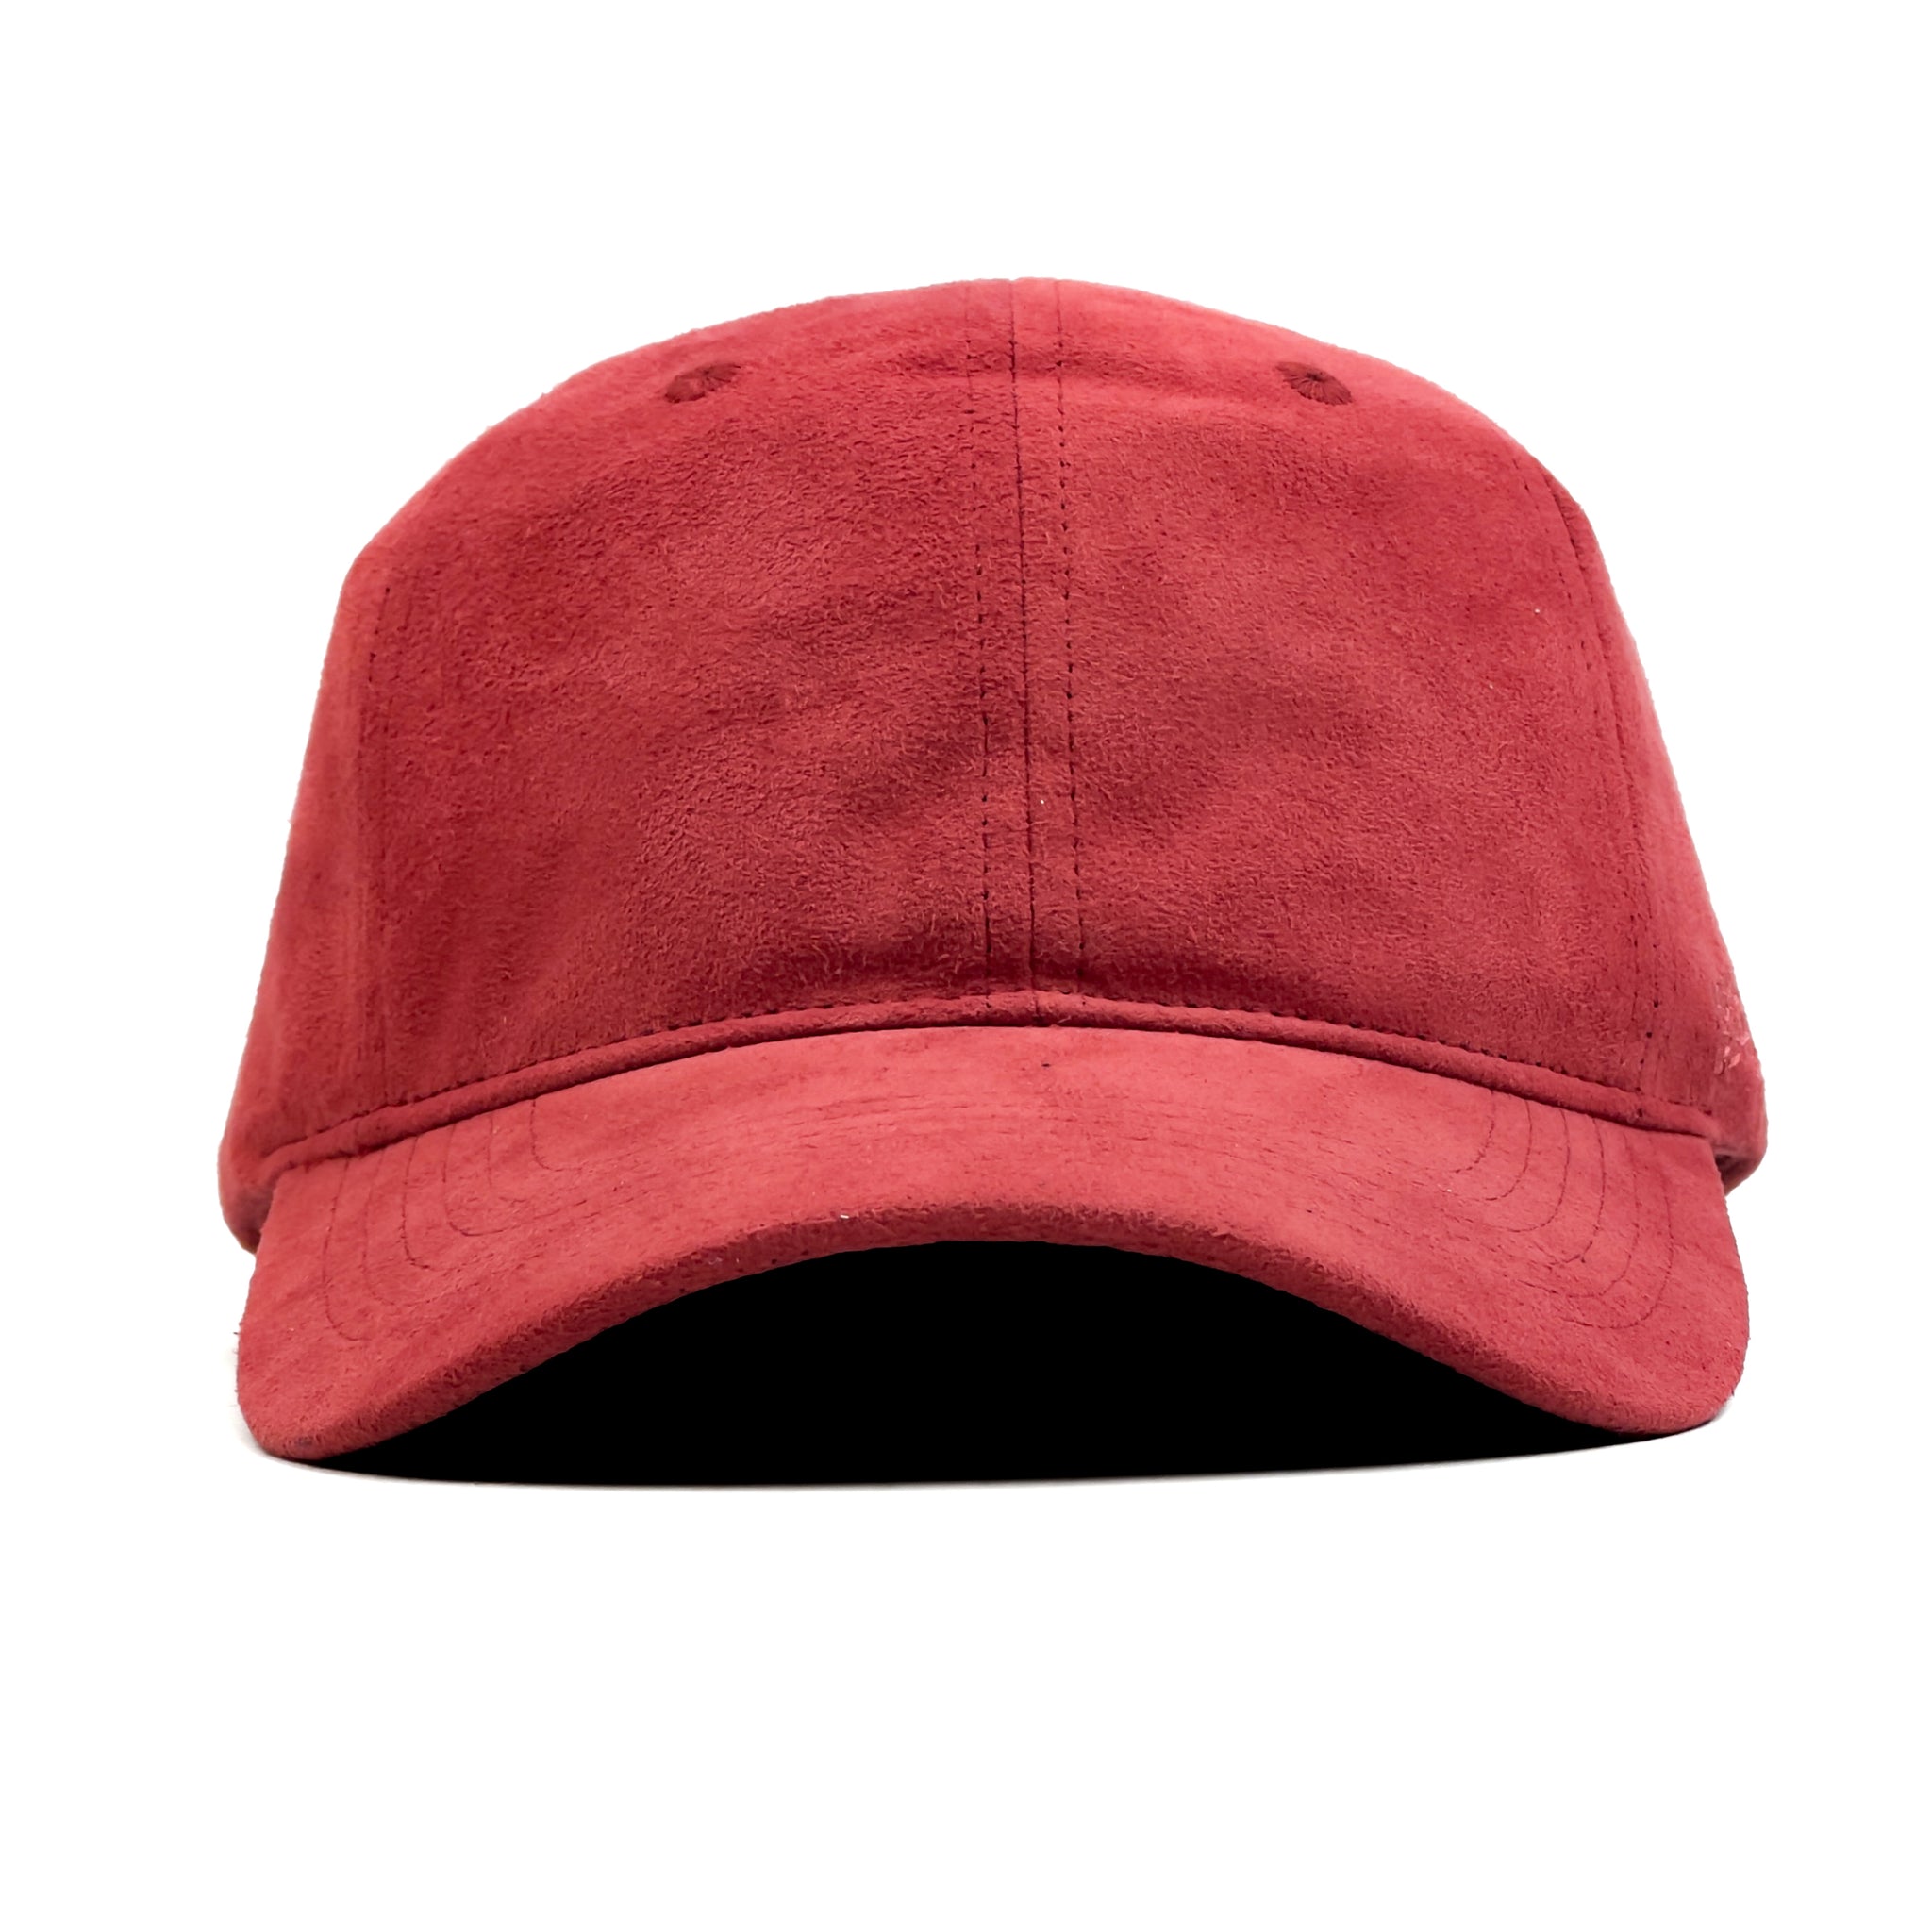 HEAD GEAR BASIC BARN RED CAP